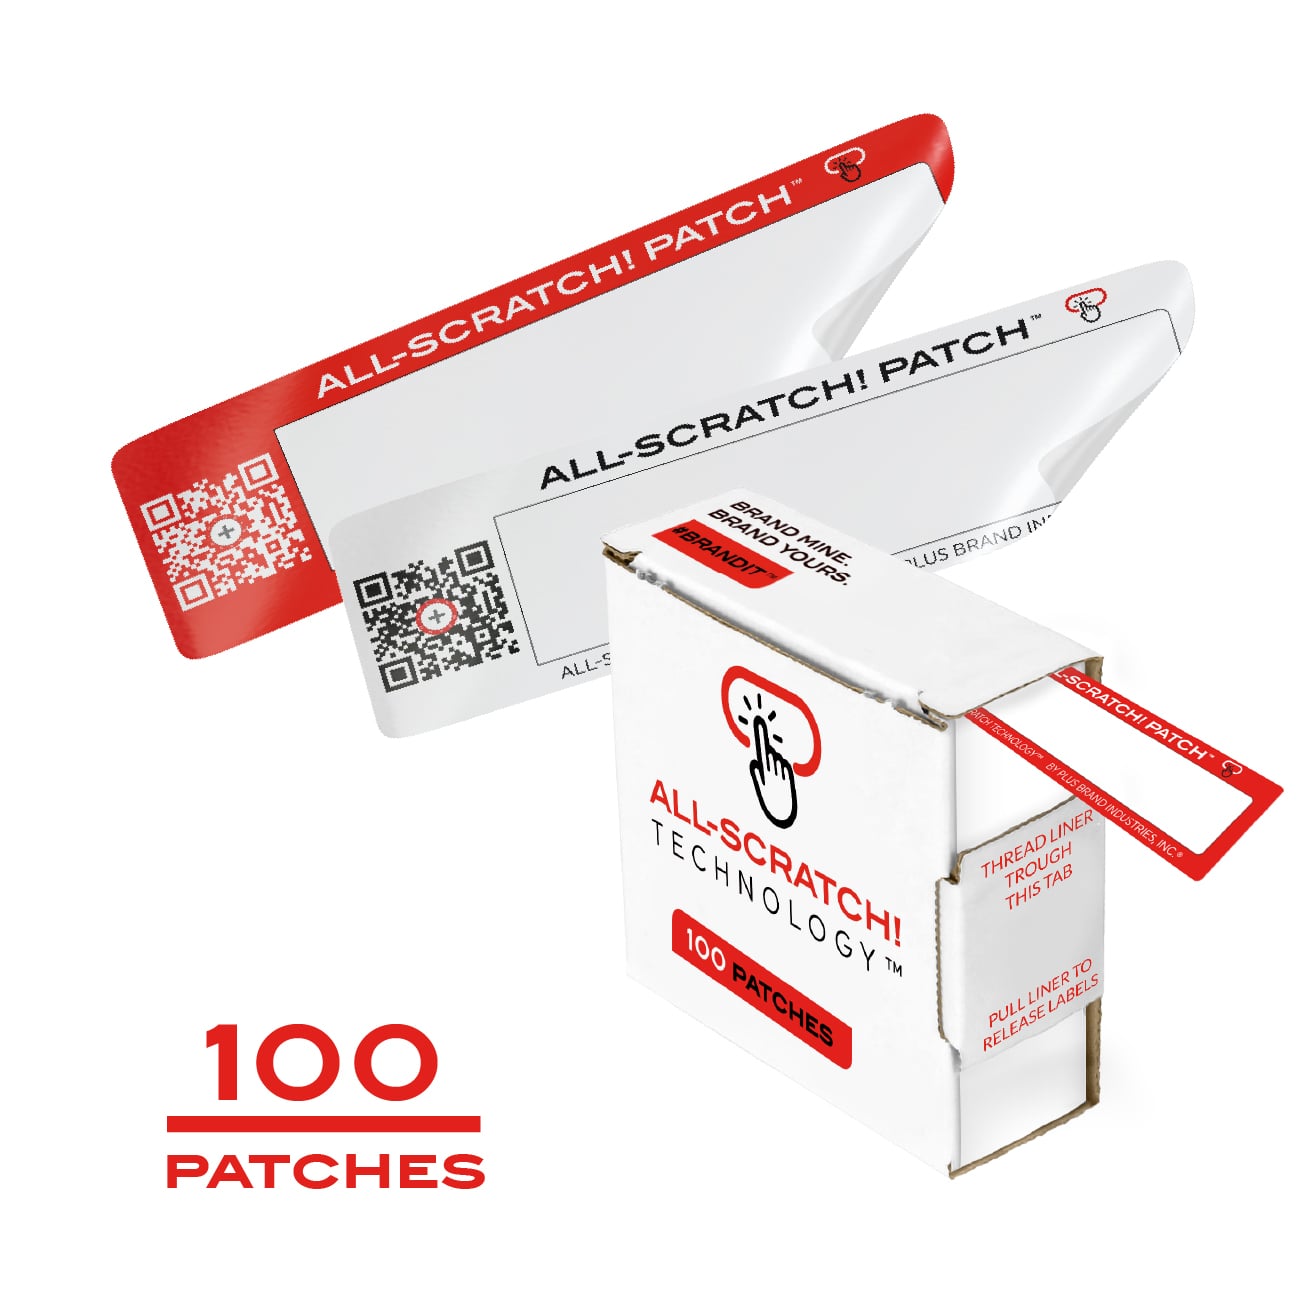 ALL-SCRATCH!® PATCH 100 PACK - All-Scratch! Technology